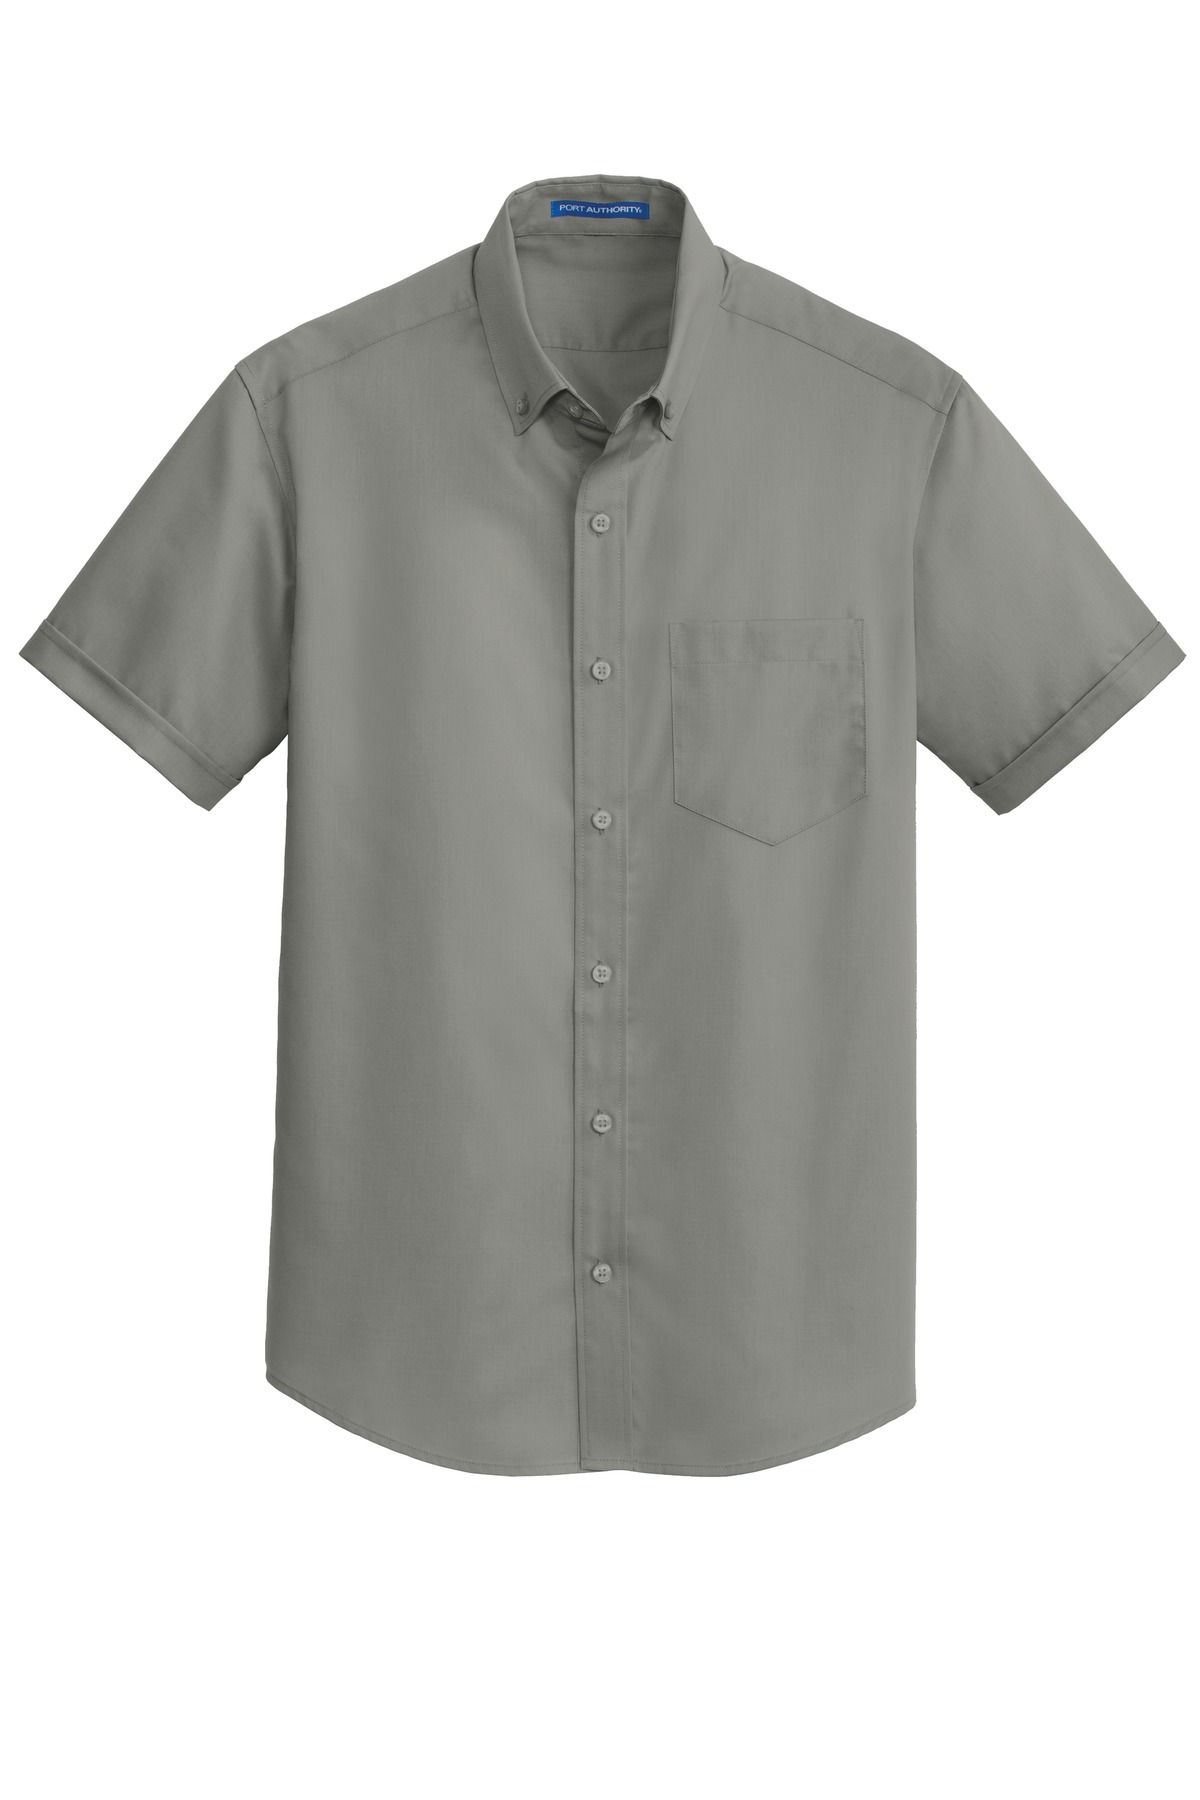 Short Sleeve SuperPro Twill Shirt - S664